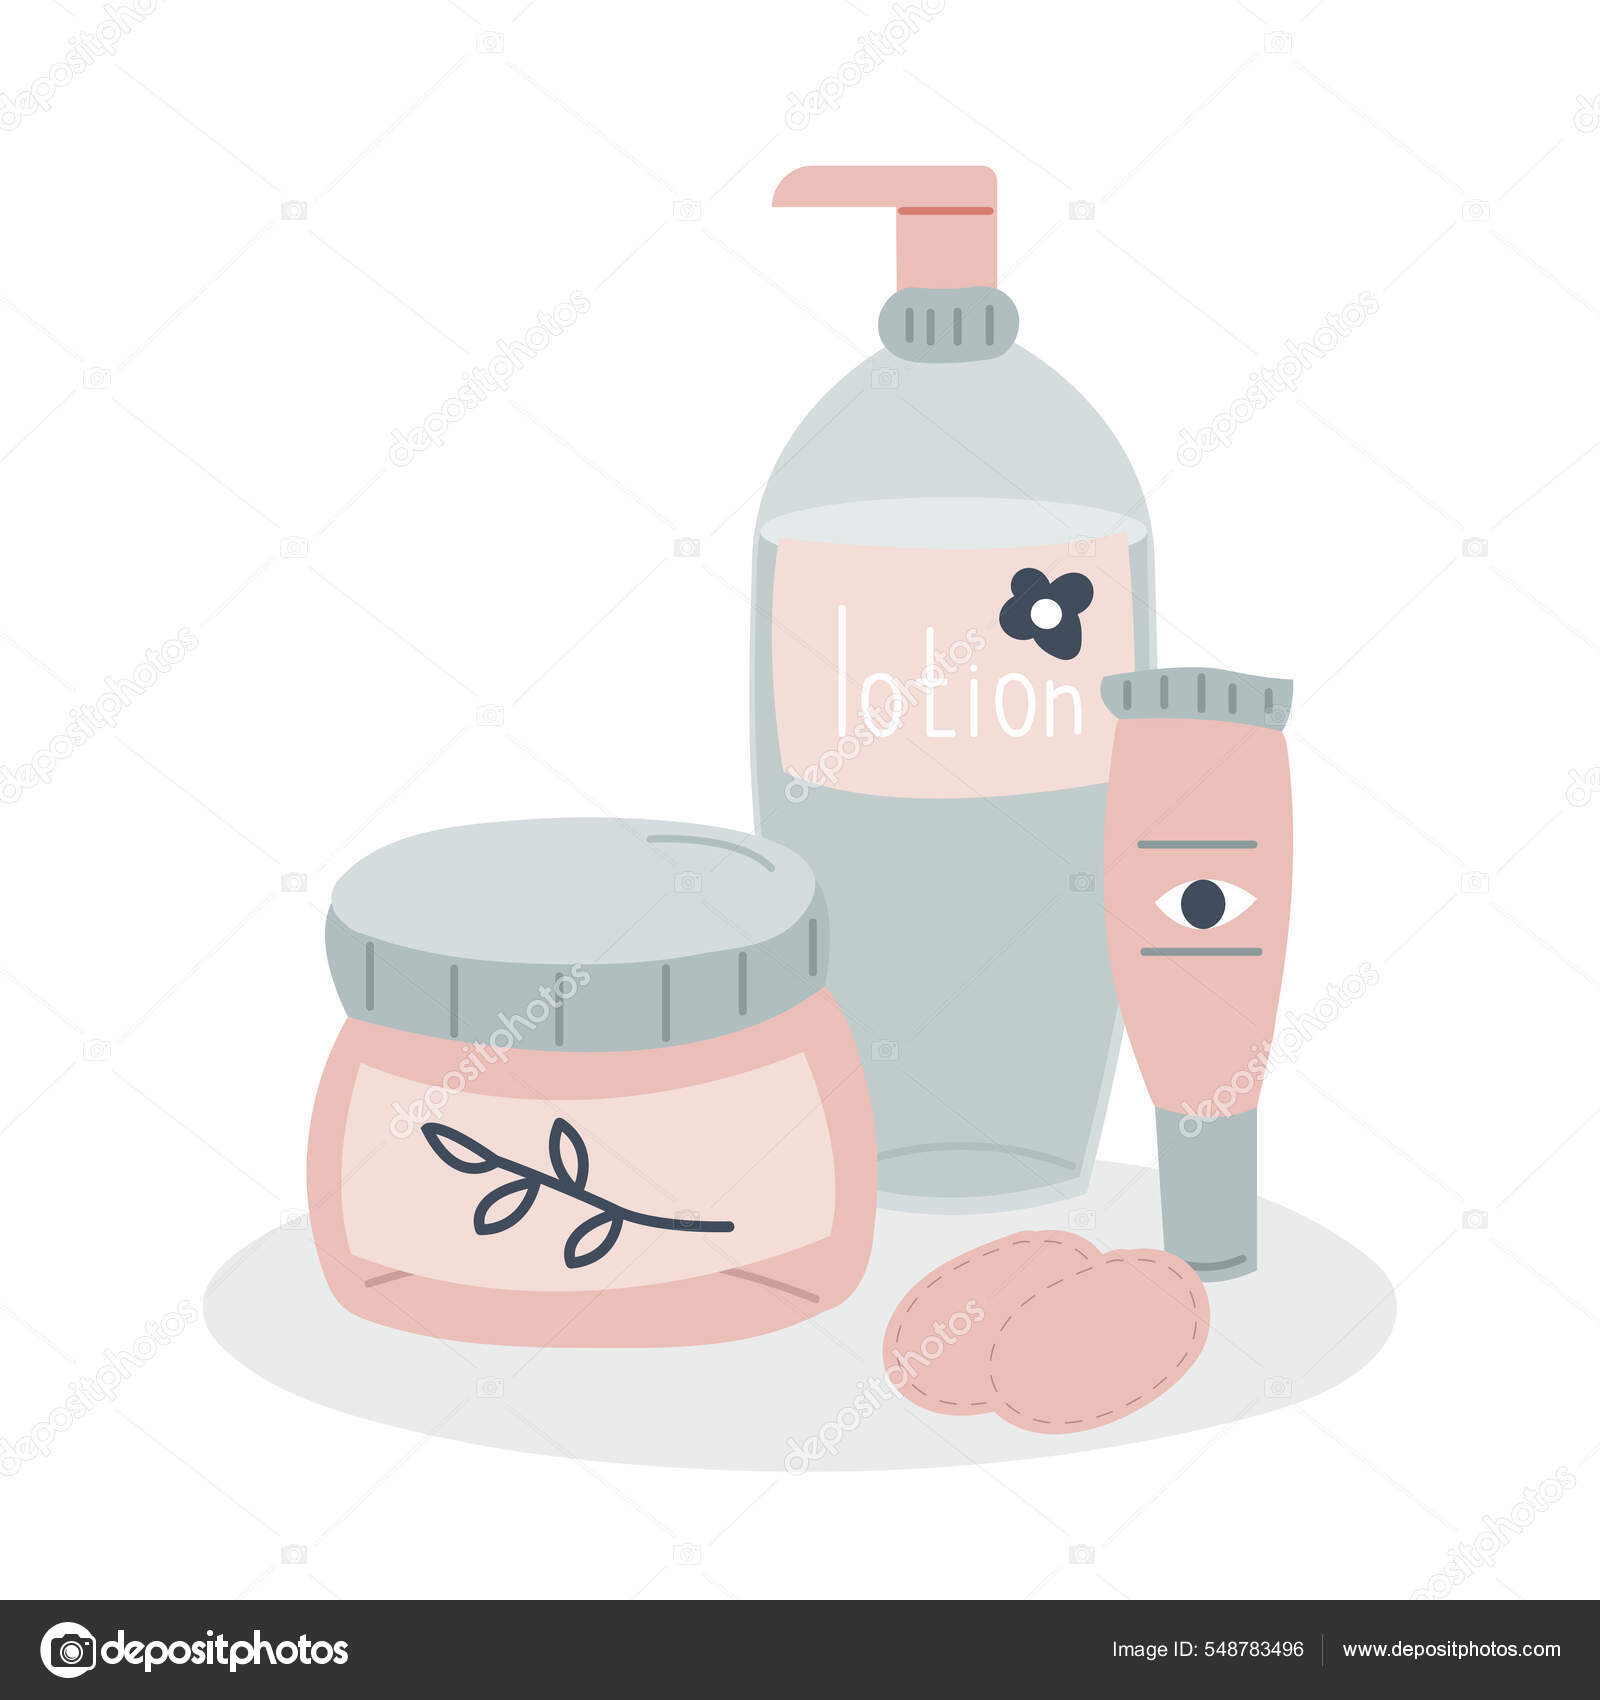 Hygiene Set. Cartoon Body and Face Skin Care daily Cosmetics